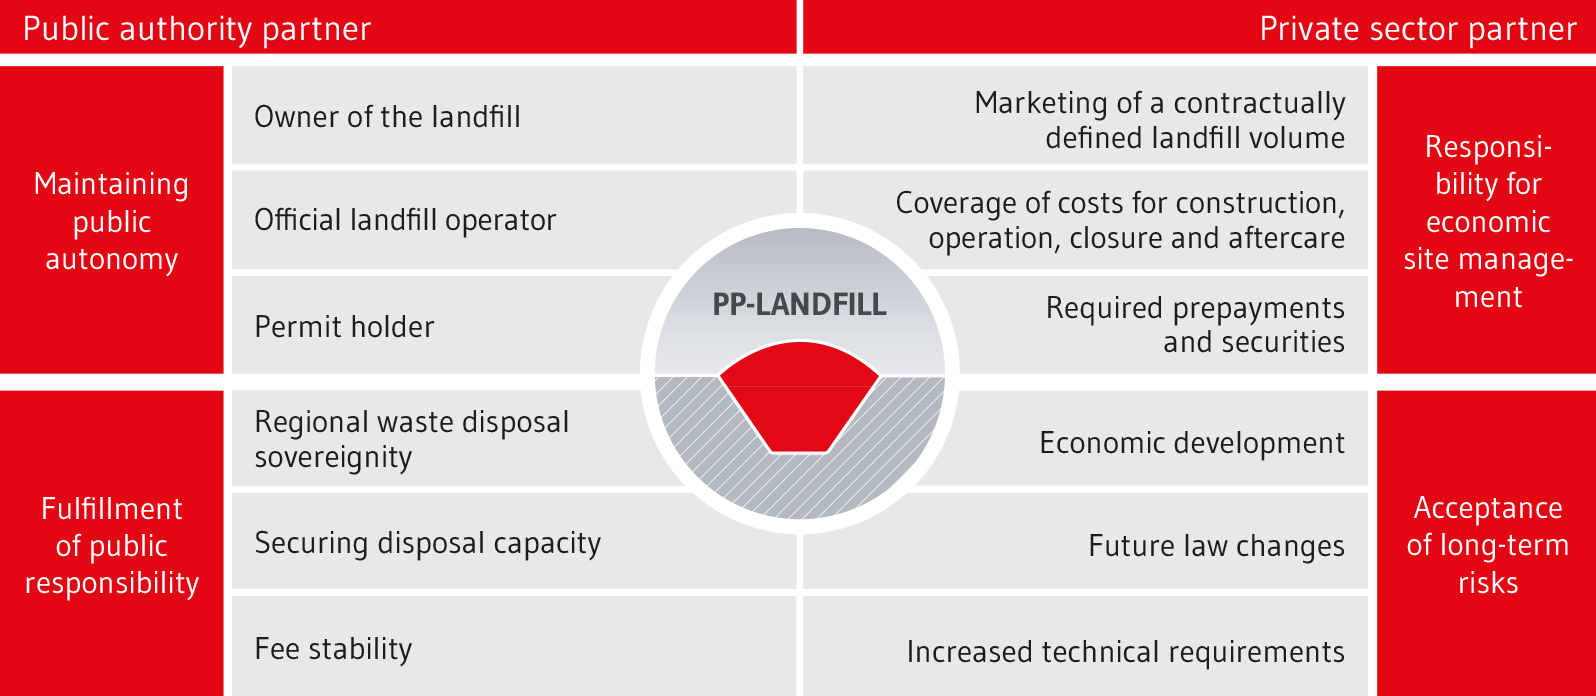 Optimum landfill management with PP-LANDFILL